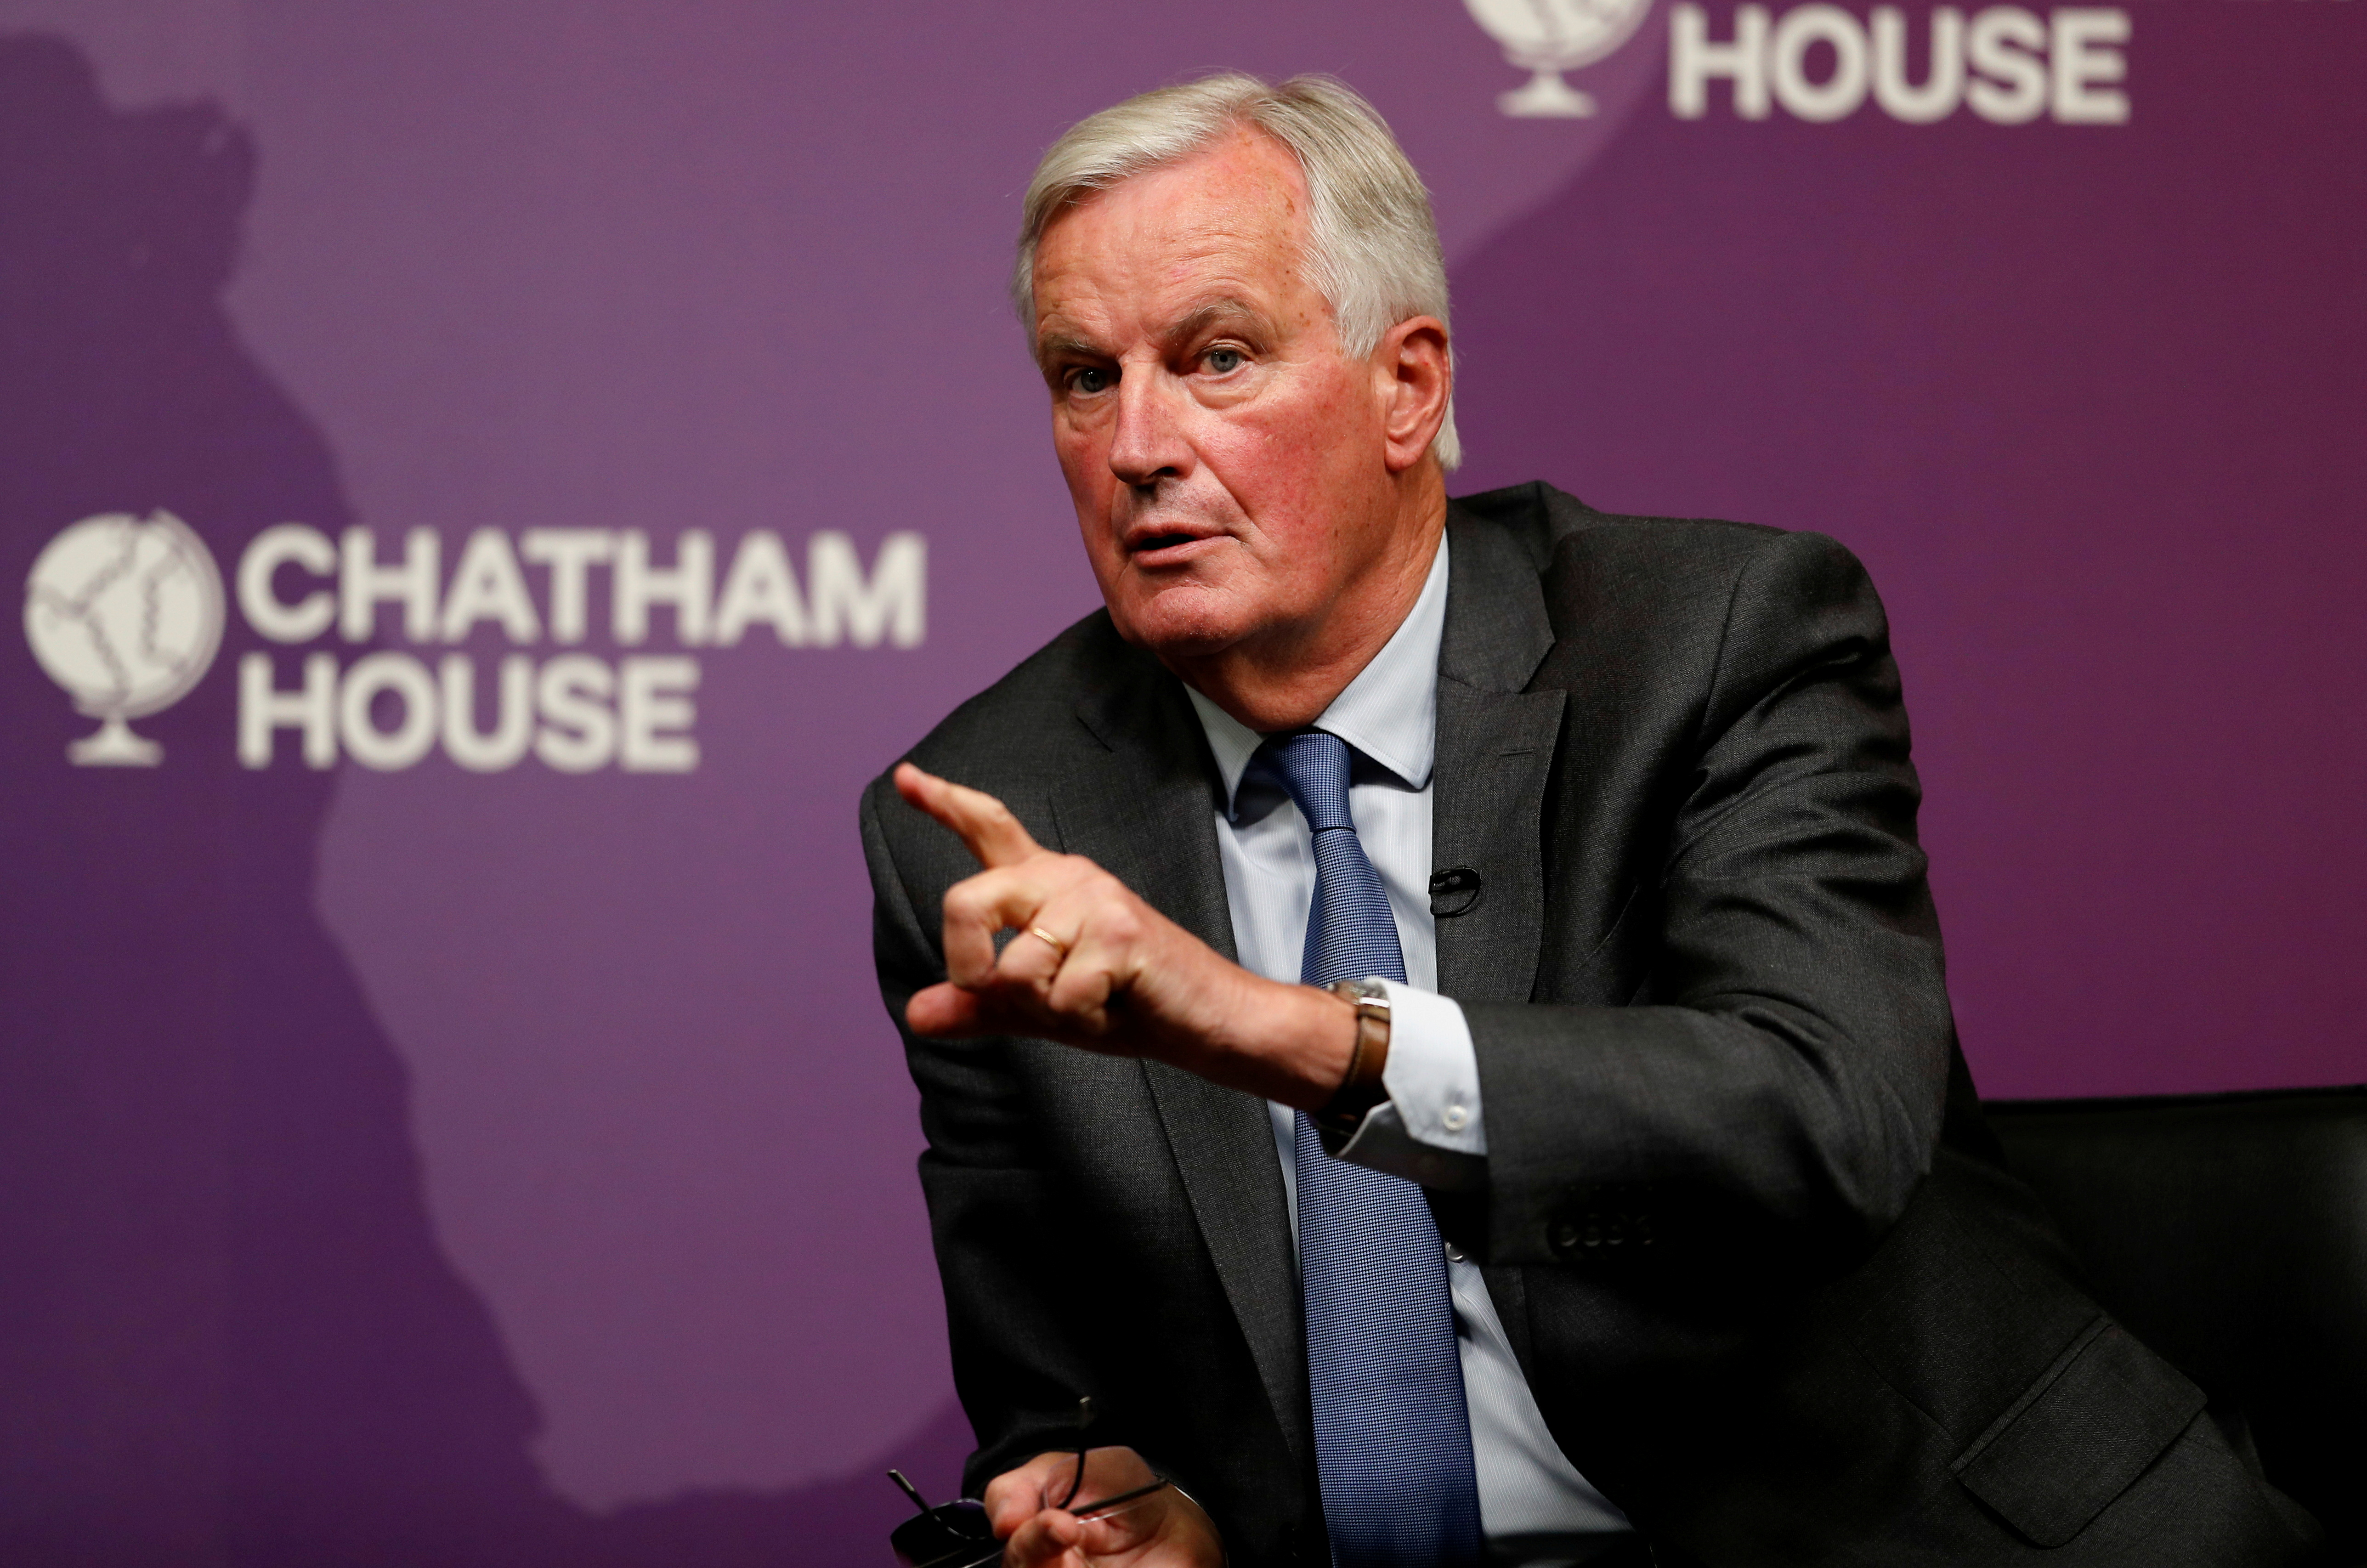 Former EU chief negotiator Michel Barnier speaks at Chatham House in London